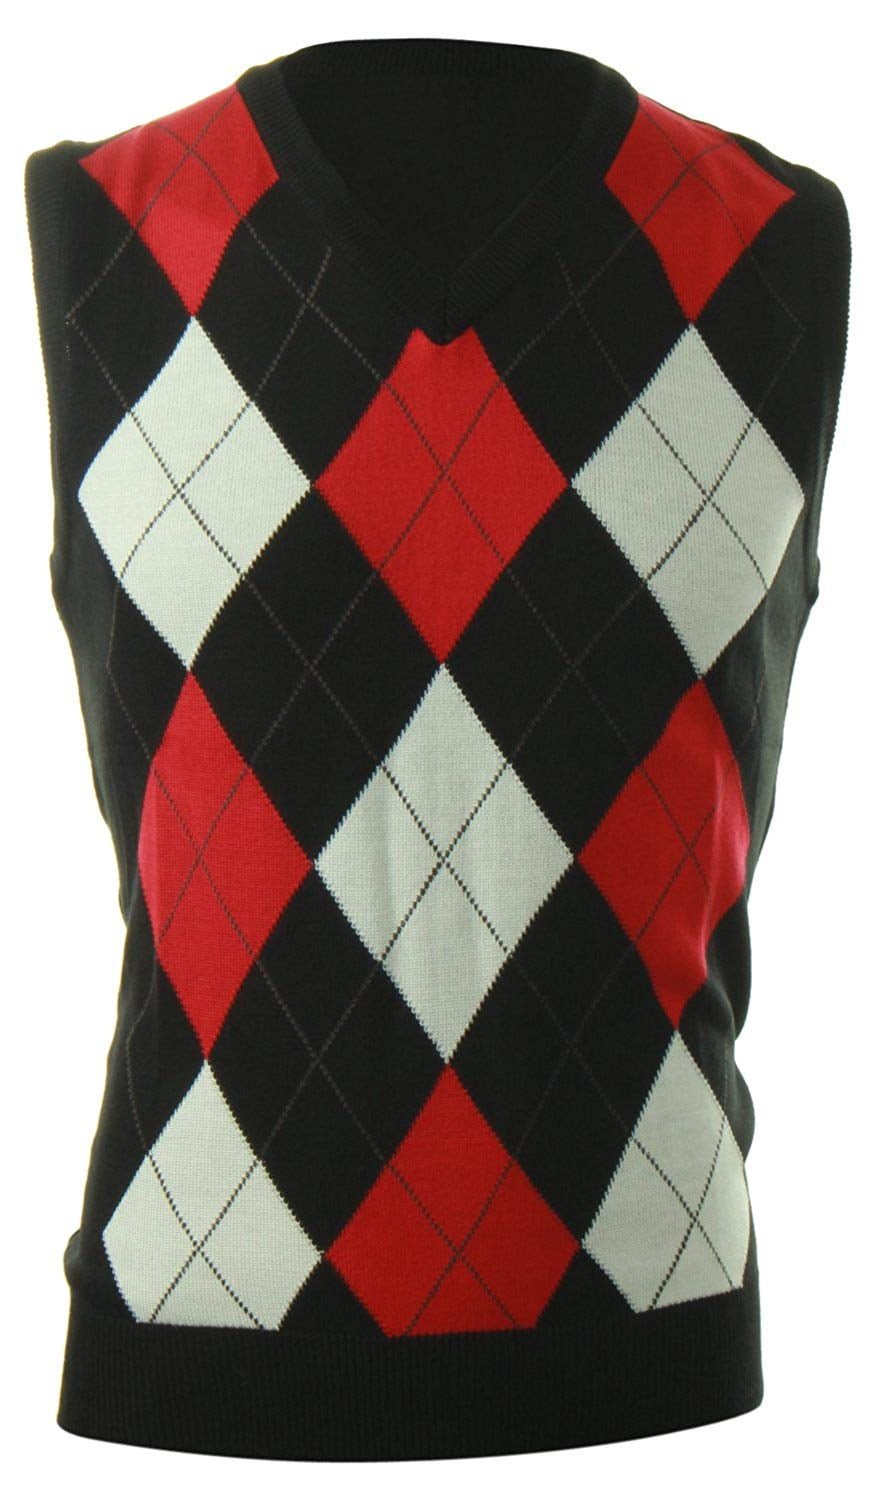 Enimay - Enimay Mens Argyle/Plain V-Neck Golf Sweater Vest SV255 Black ...